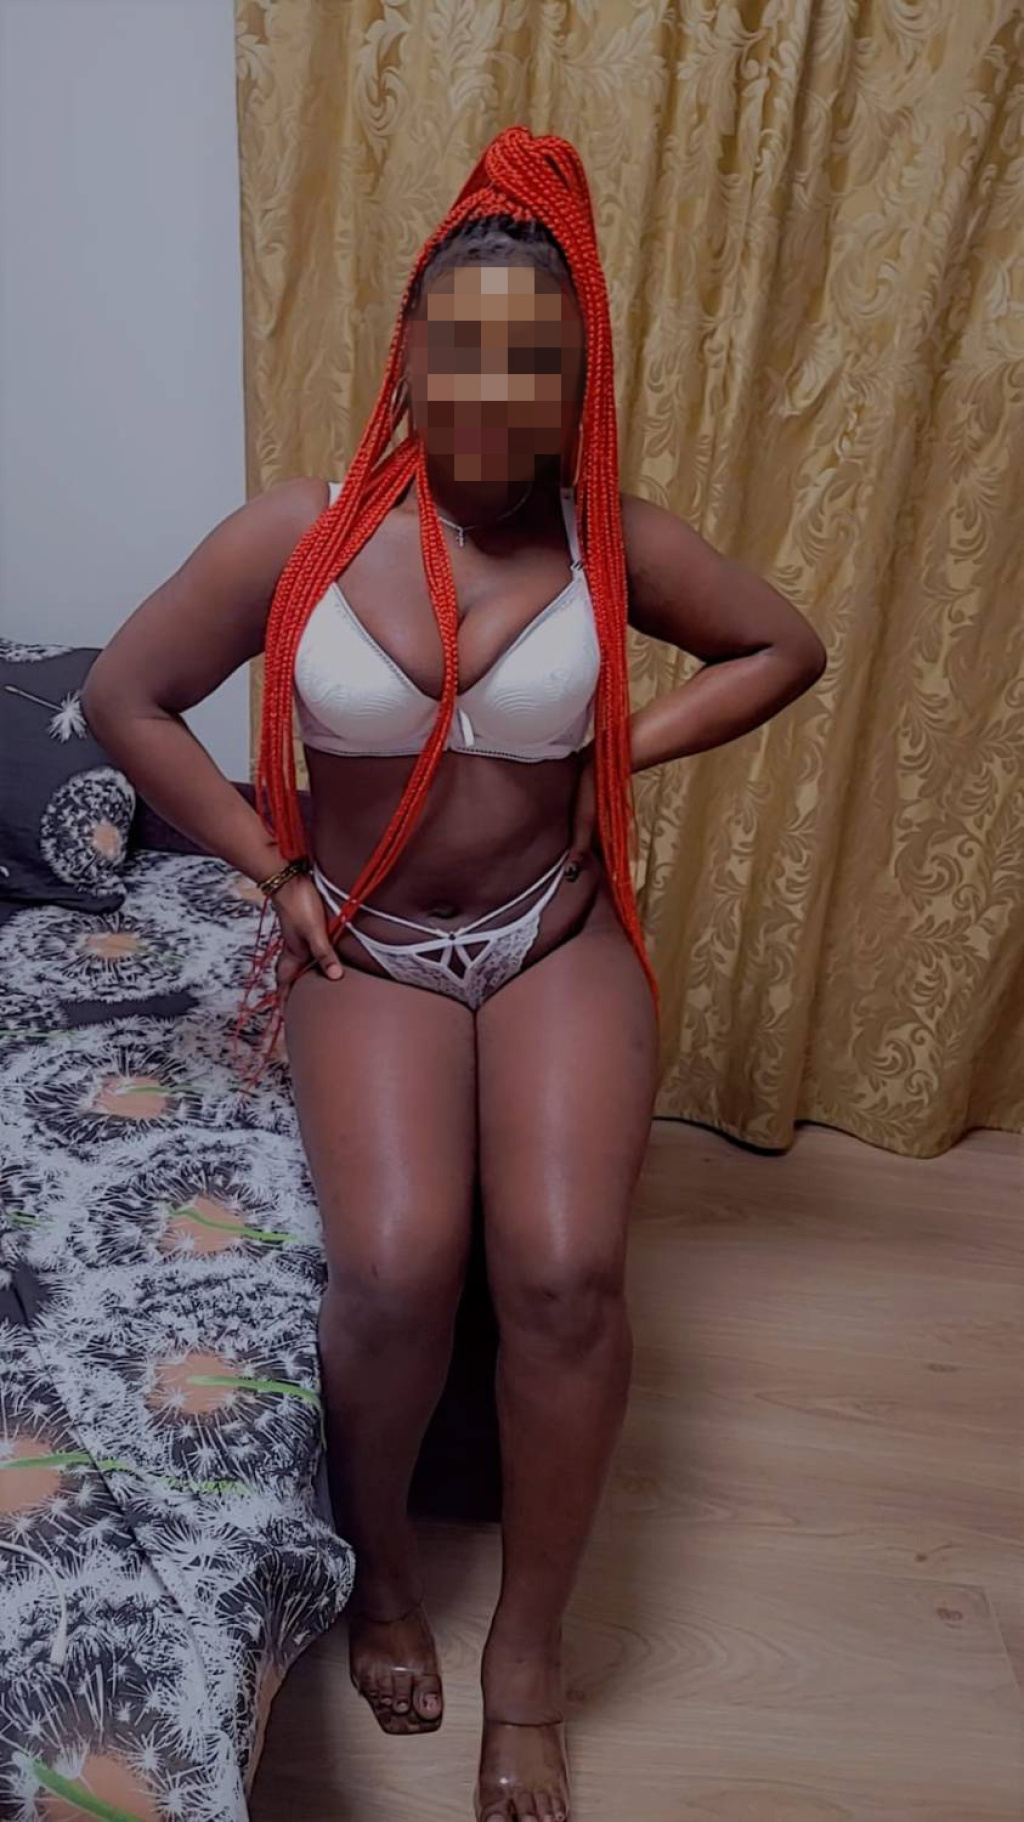 Сильвия Афро: проститутки индивидуалки в Омске